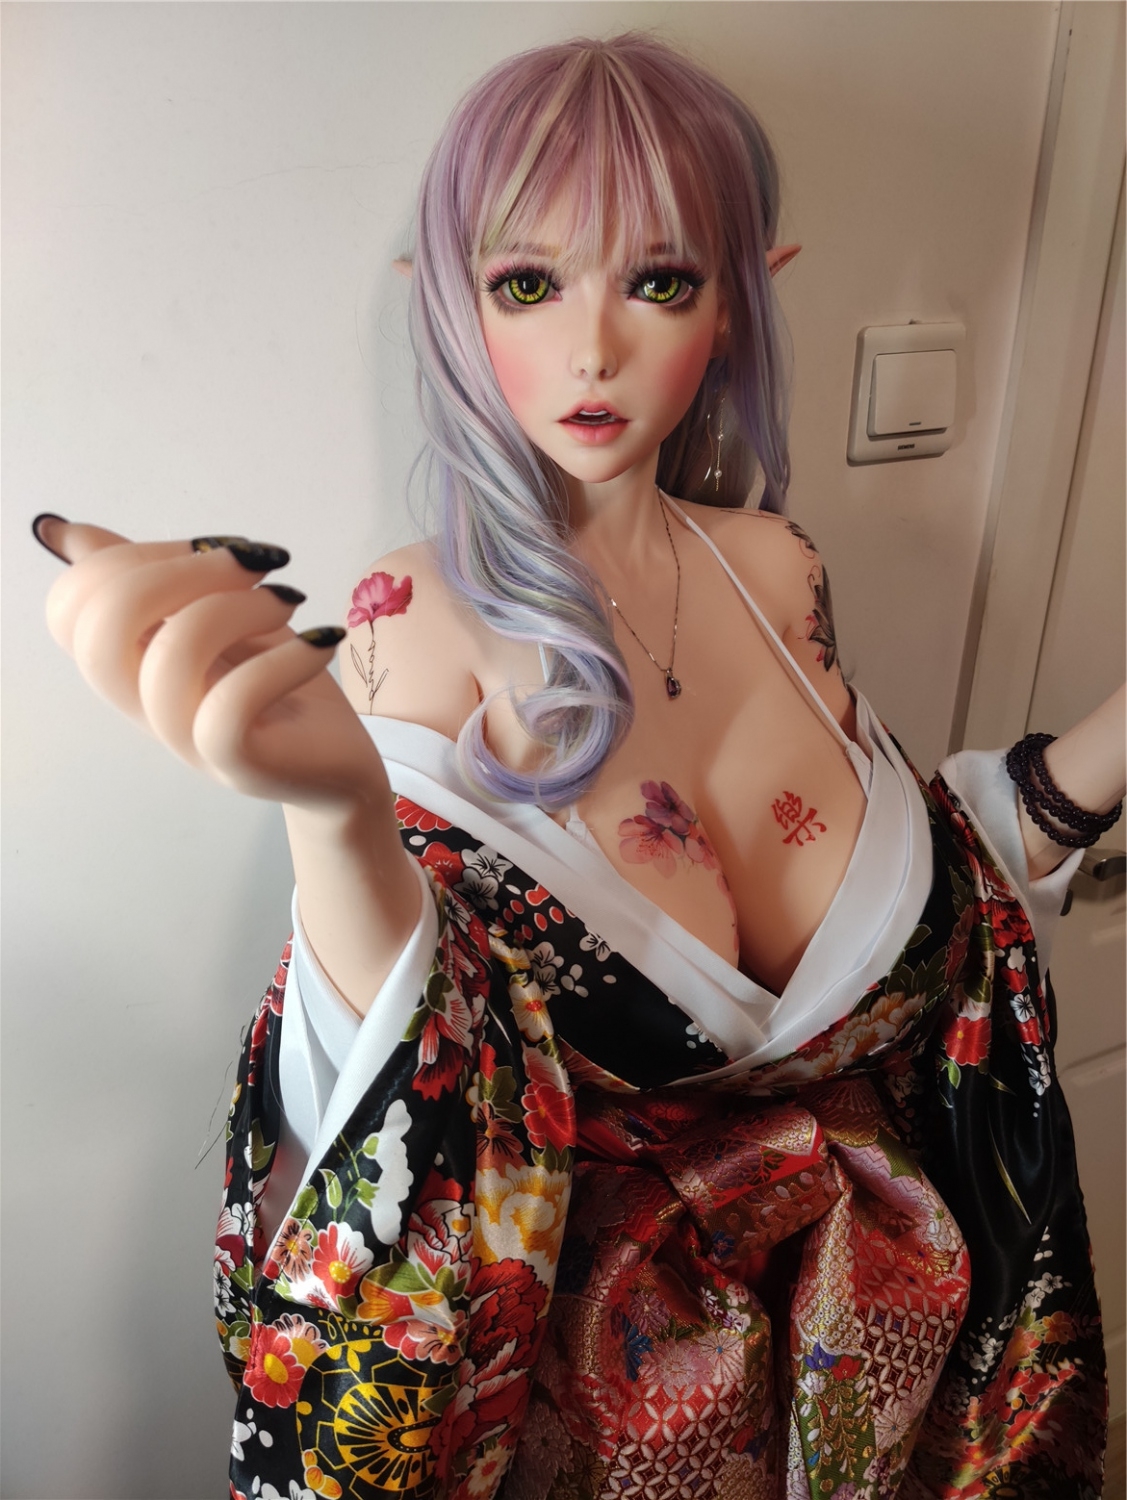 My newly received geisha-dressed ELF by crazy rabbit! HB024 Takano Rie 0